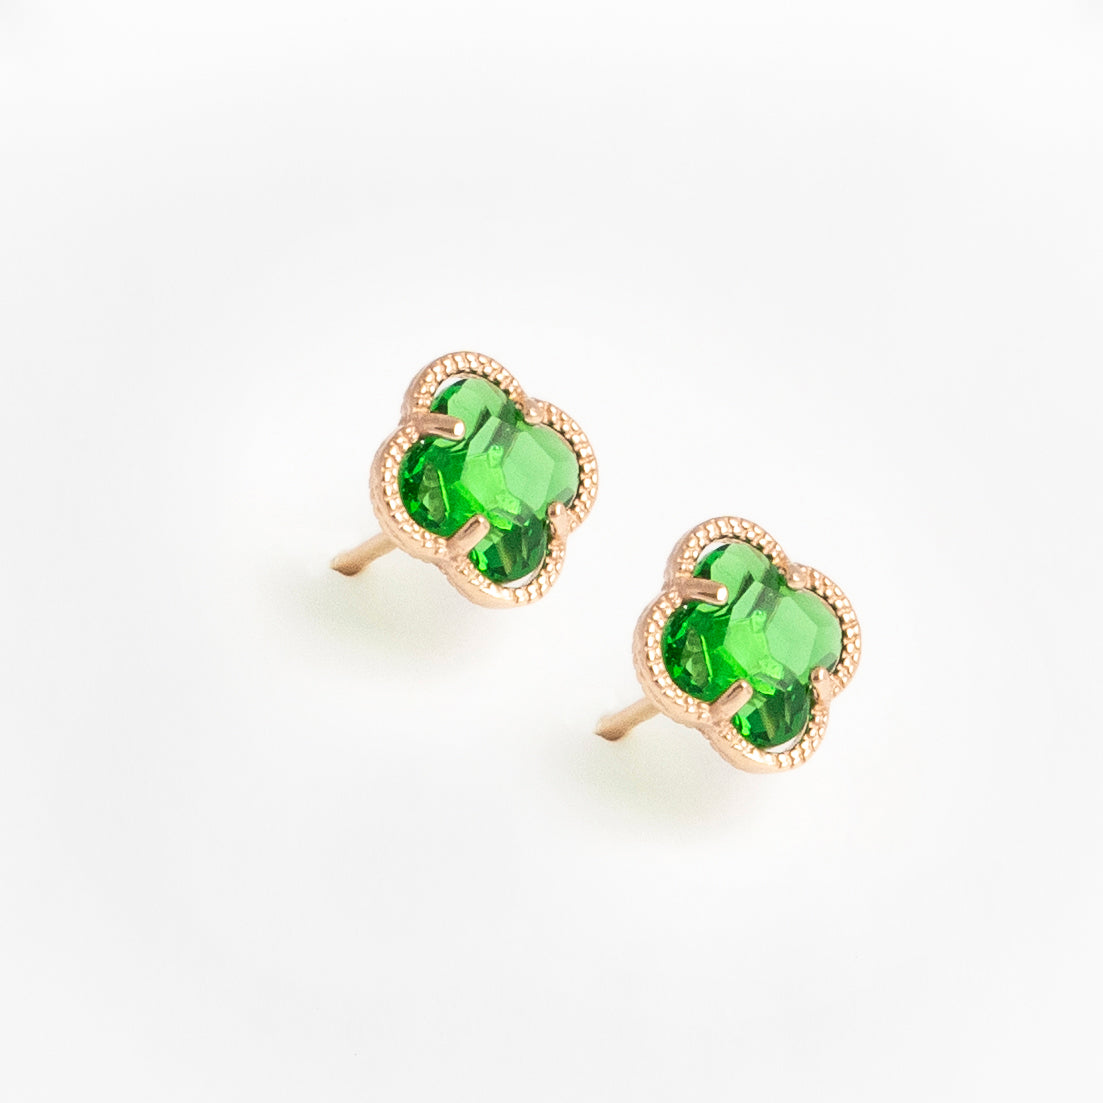 Cloverleaf earrings with emerald quartz